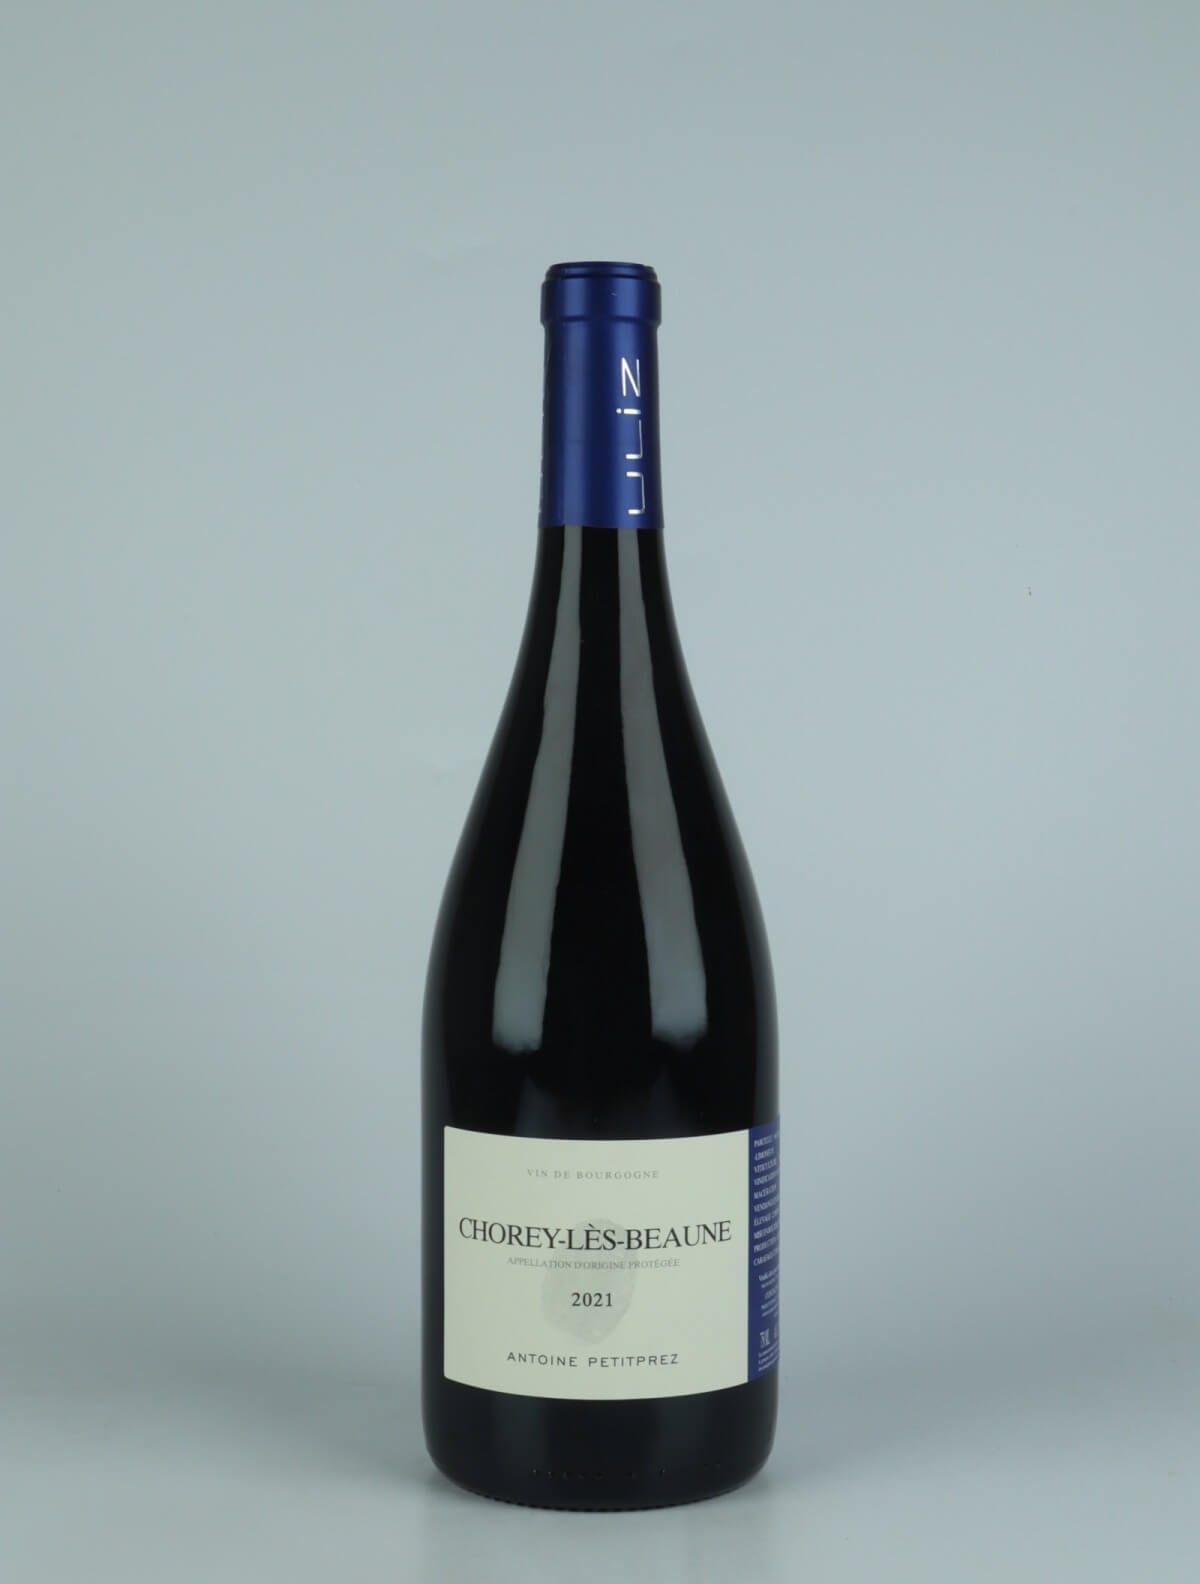 A bottle 2021 Chorey-les-Beaune Red wine from Antoine Petitprez, Burgundy in France